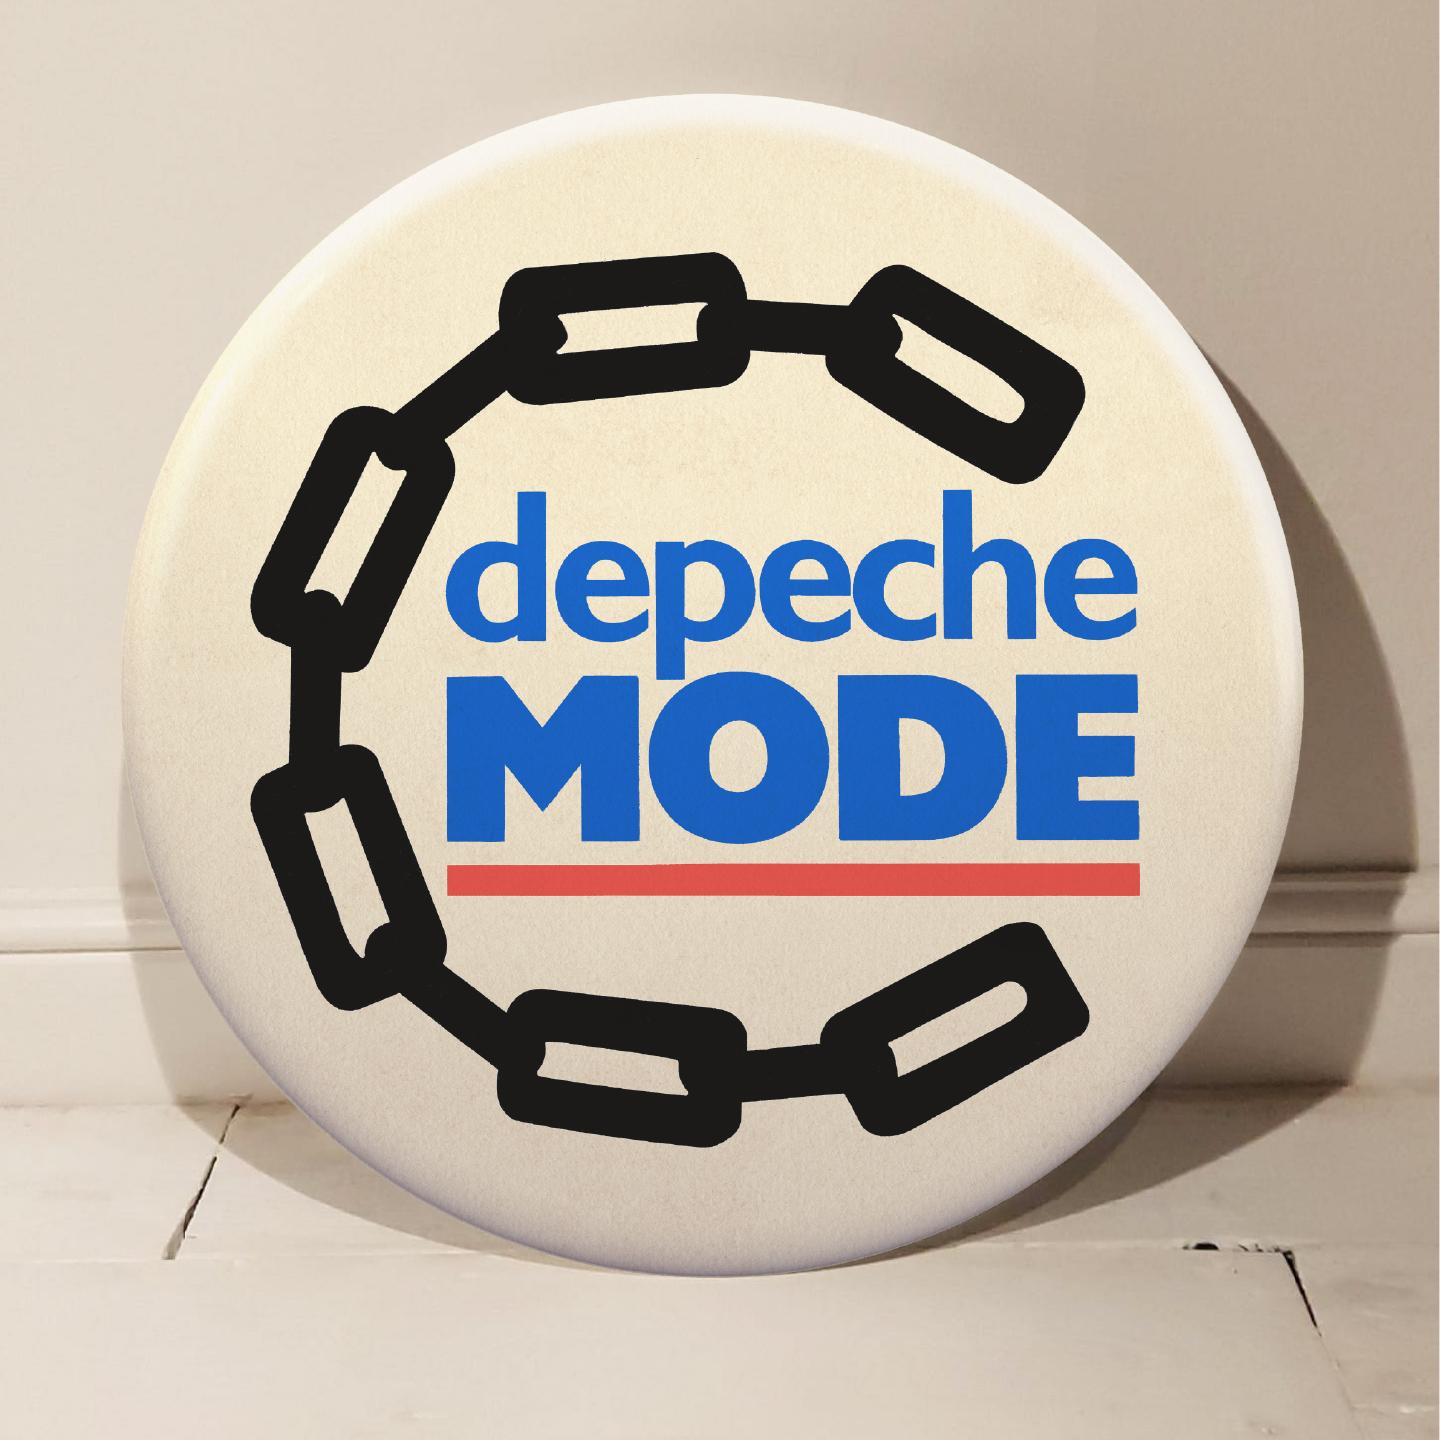 Depeche Mode Giant Handmade 3D Vintage Button - Mixed Media Art by Tony Dennis